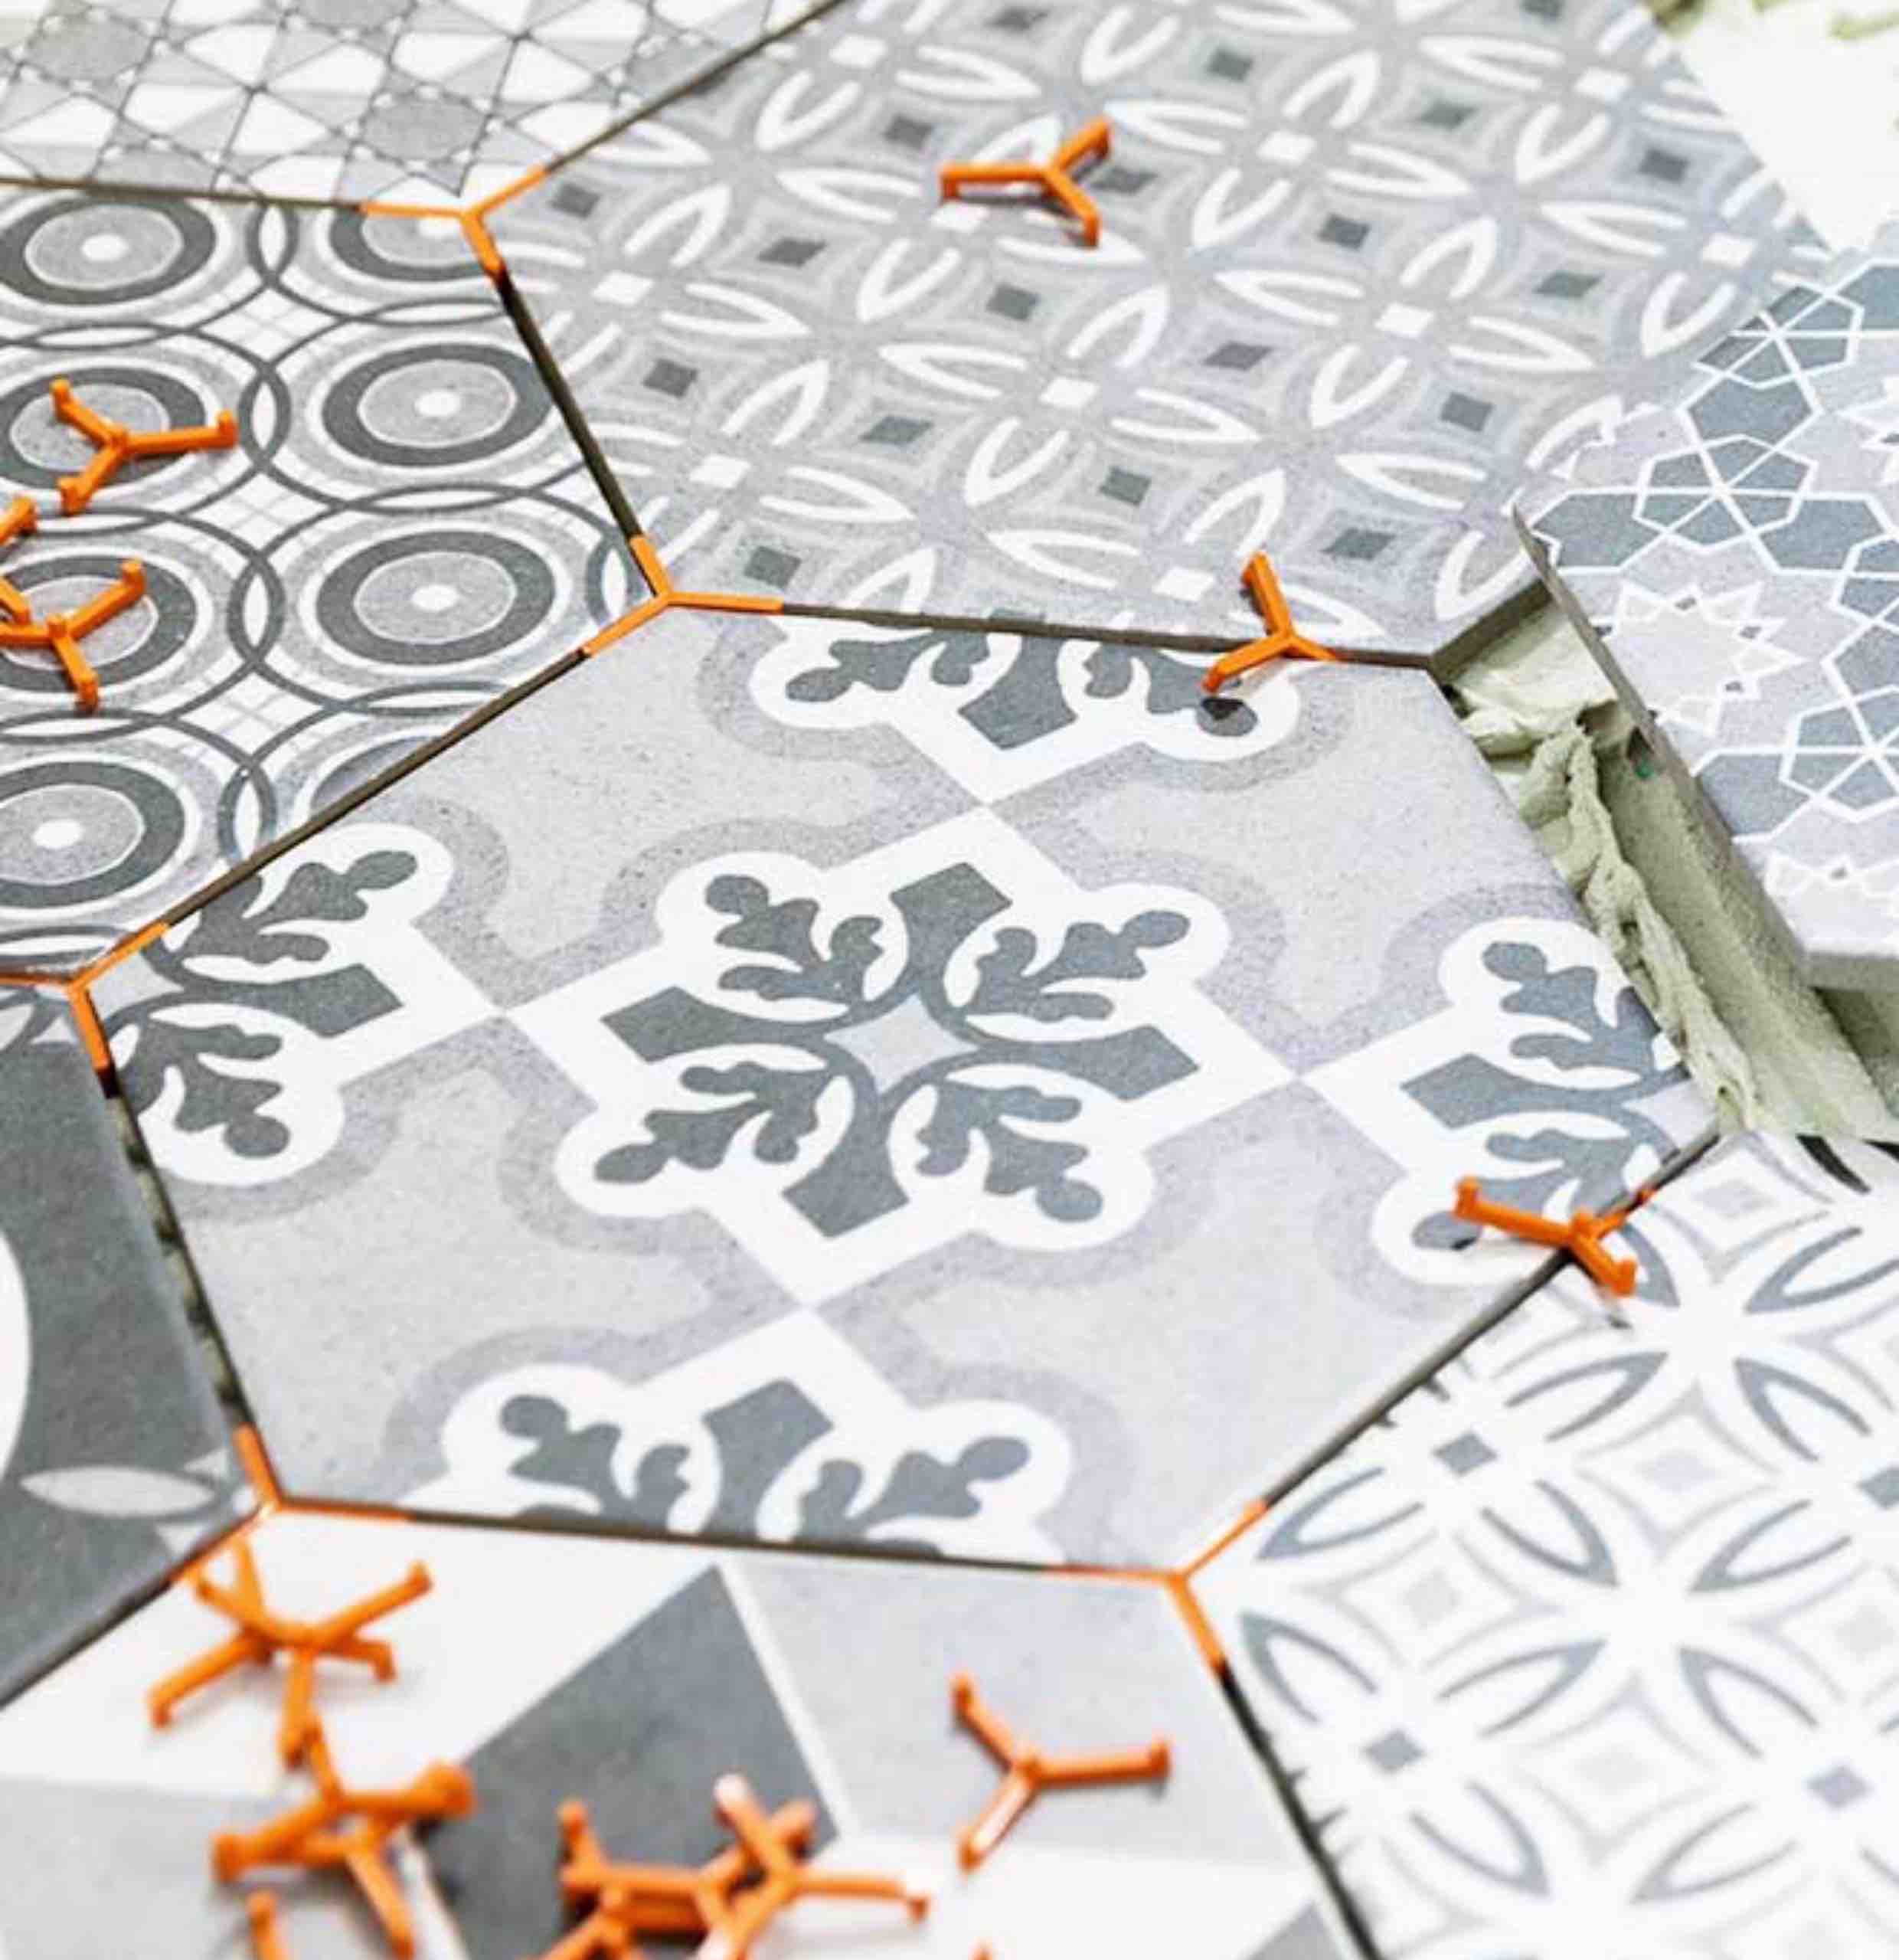 Trendy hexagonal tiles installed by Footprints Floors in Durham / Chapel Hill.